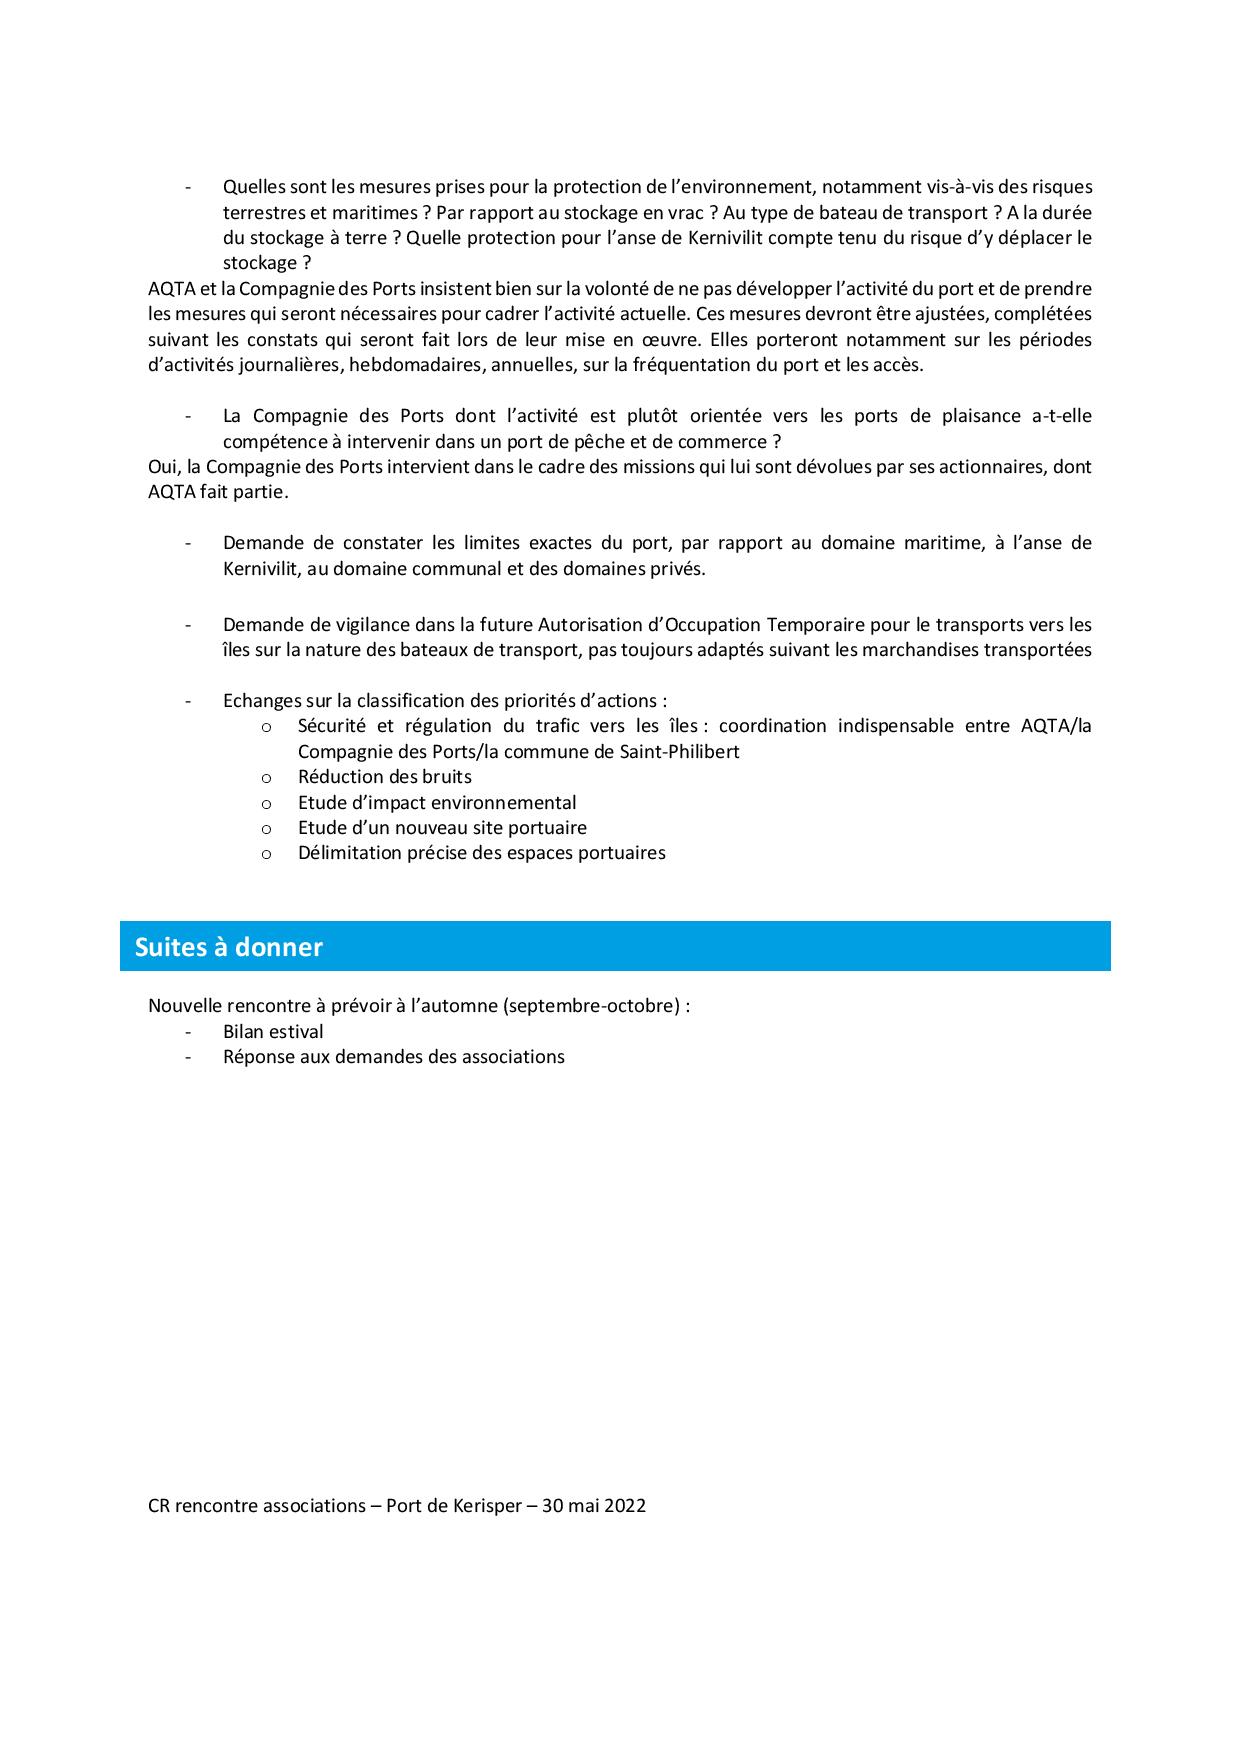 2022 05 30 CR Réunion AQTA CPM Associations-page-003.jpg